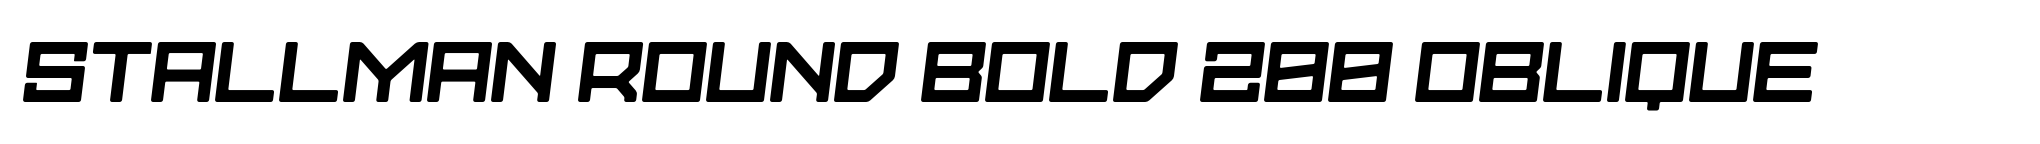 Stallman Round Bold 200 Oblique image